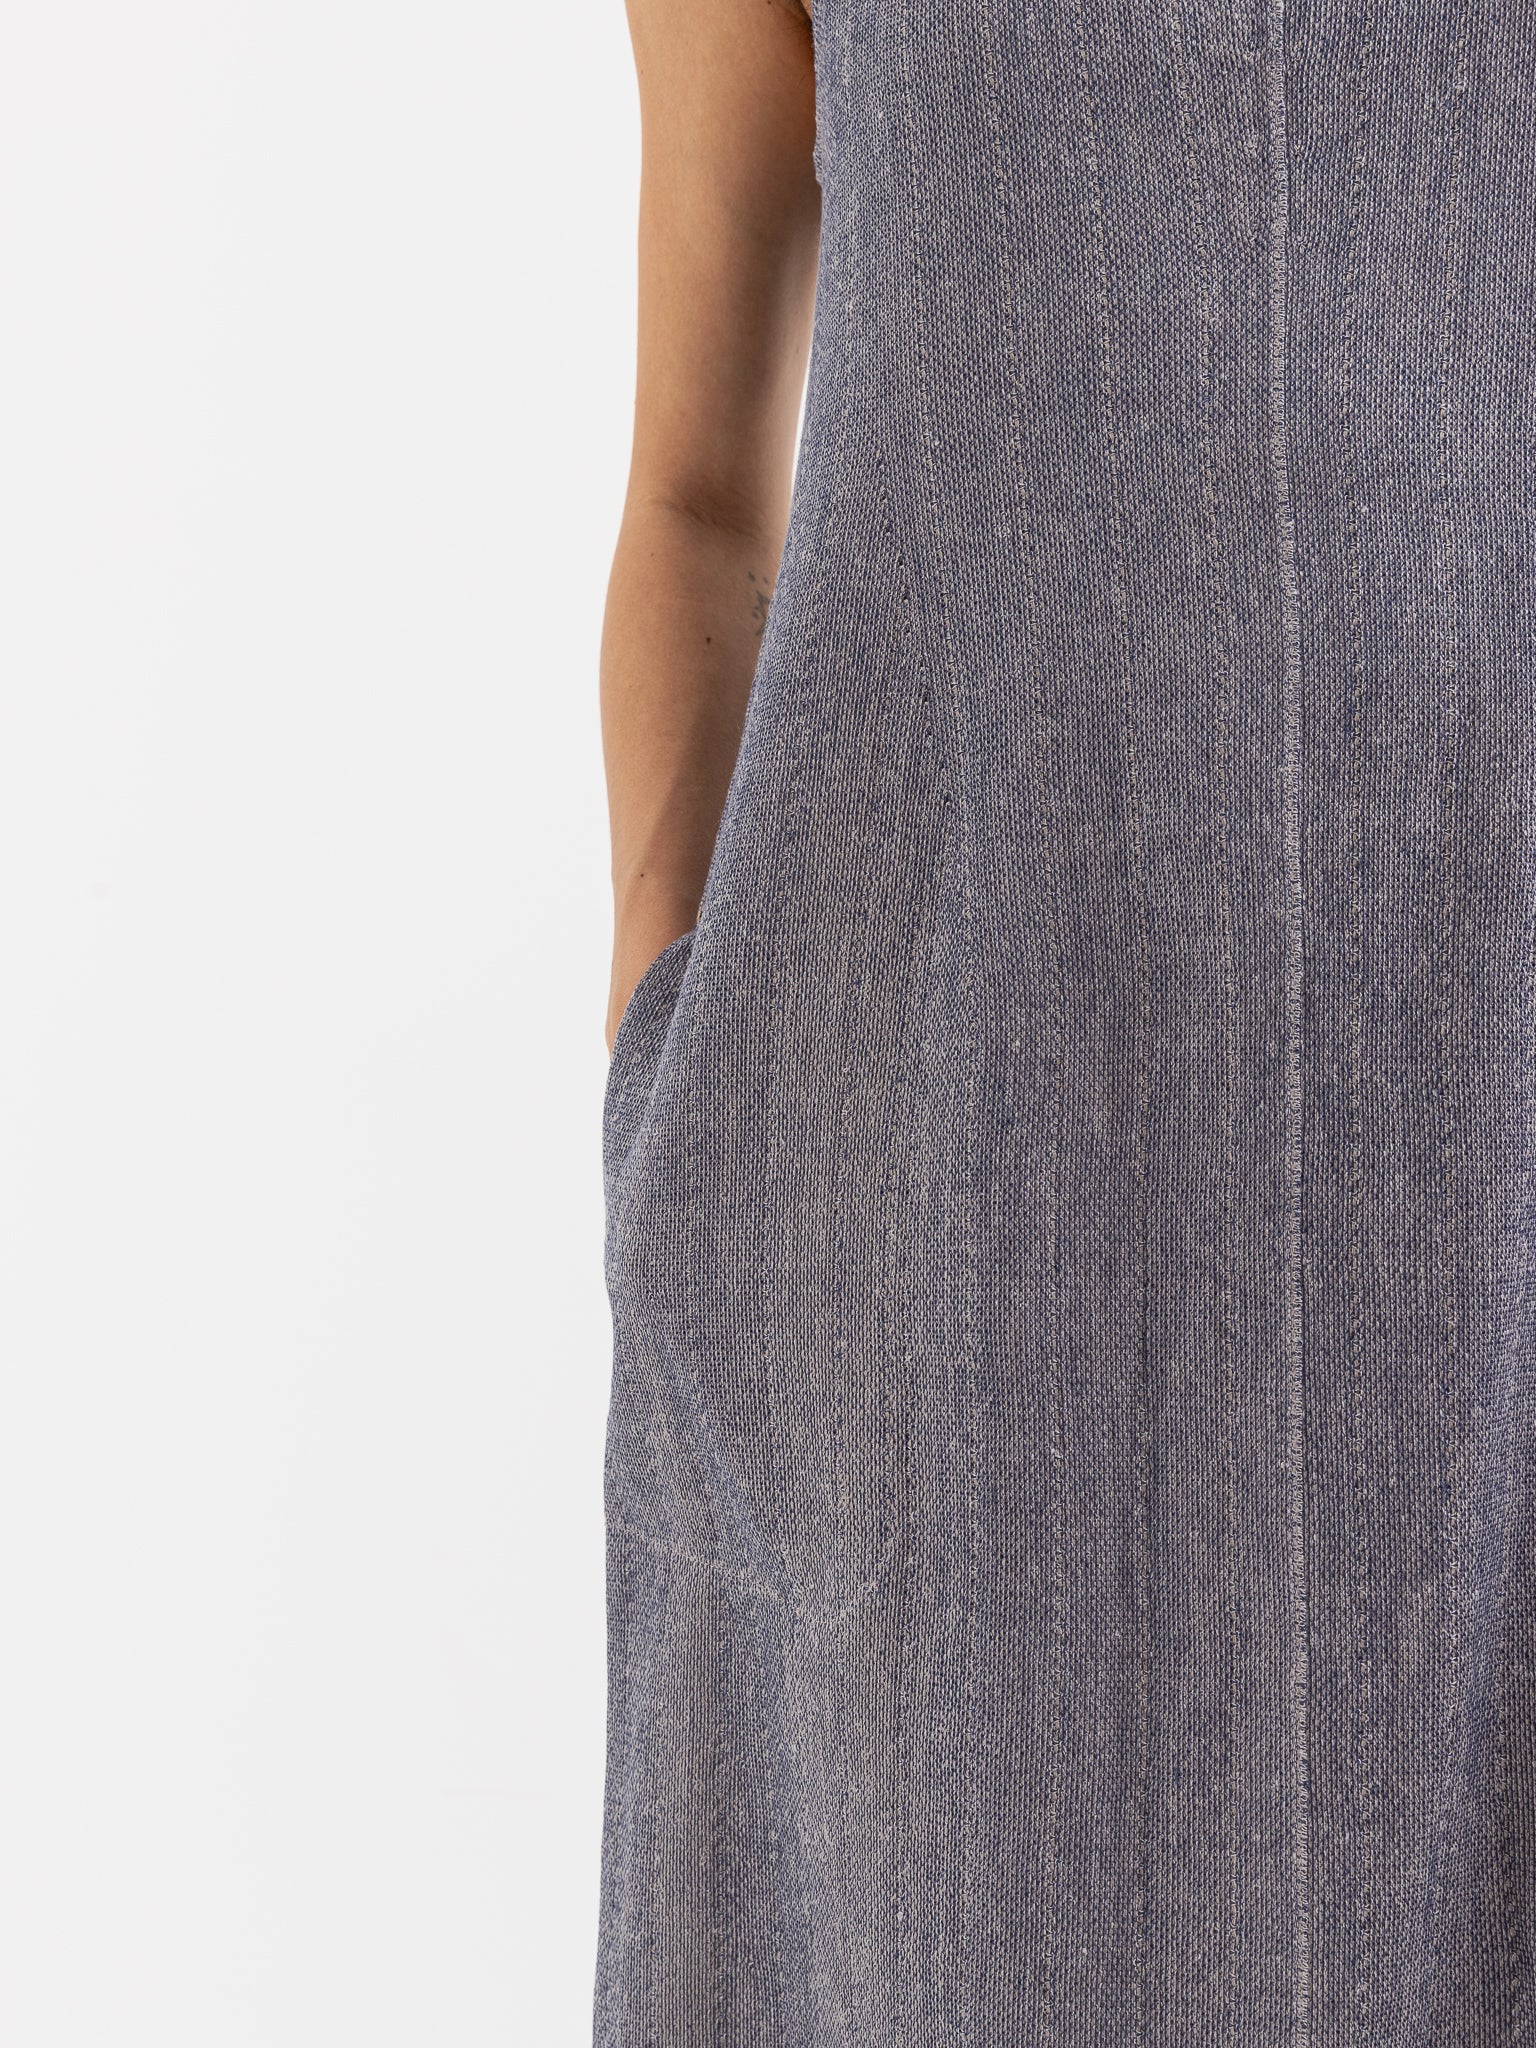 Boboutic Sun Dress, Blue Stripe - Worthwhile, Inc.